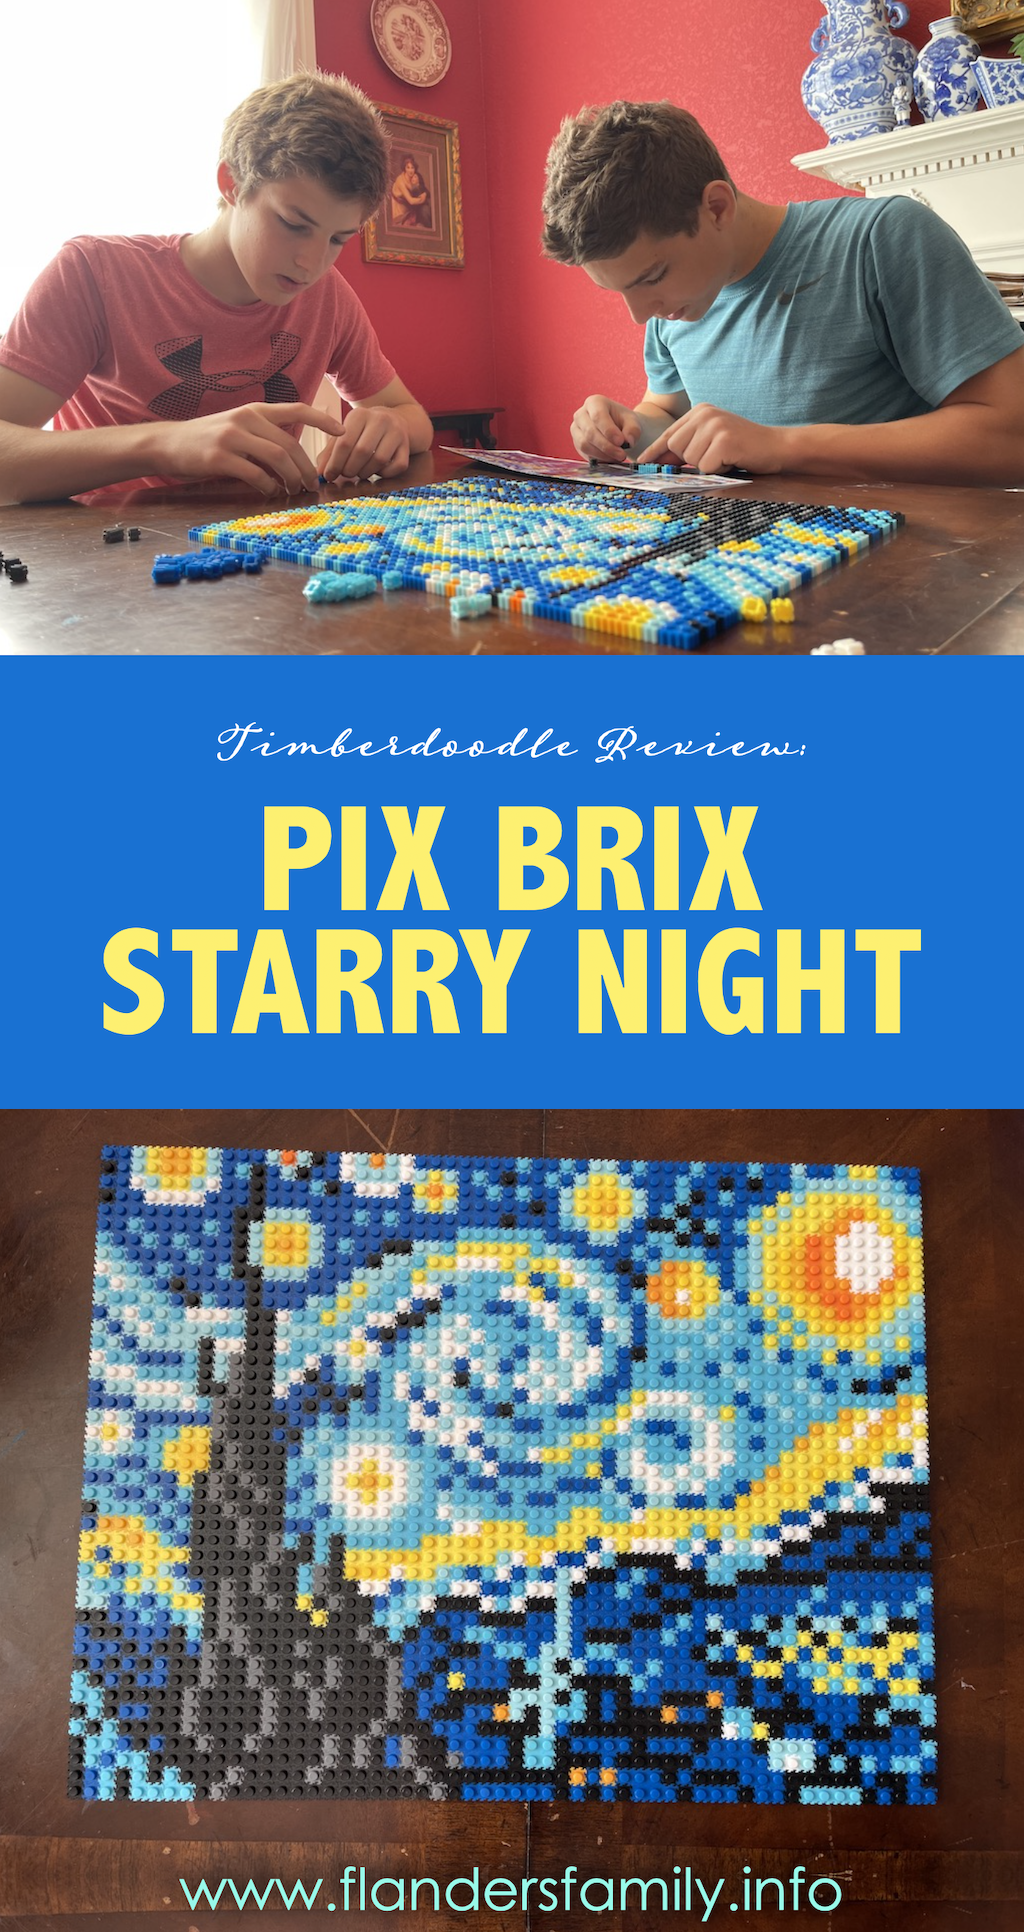 Pix Brix Starry Night Review